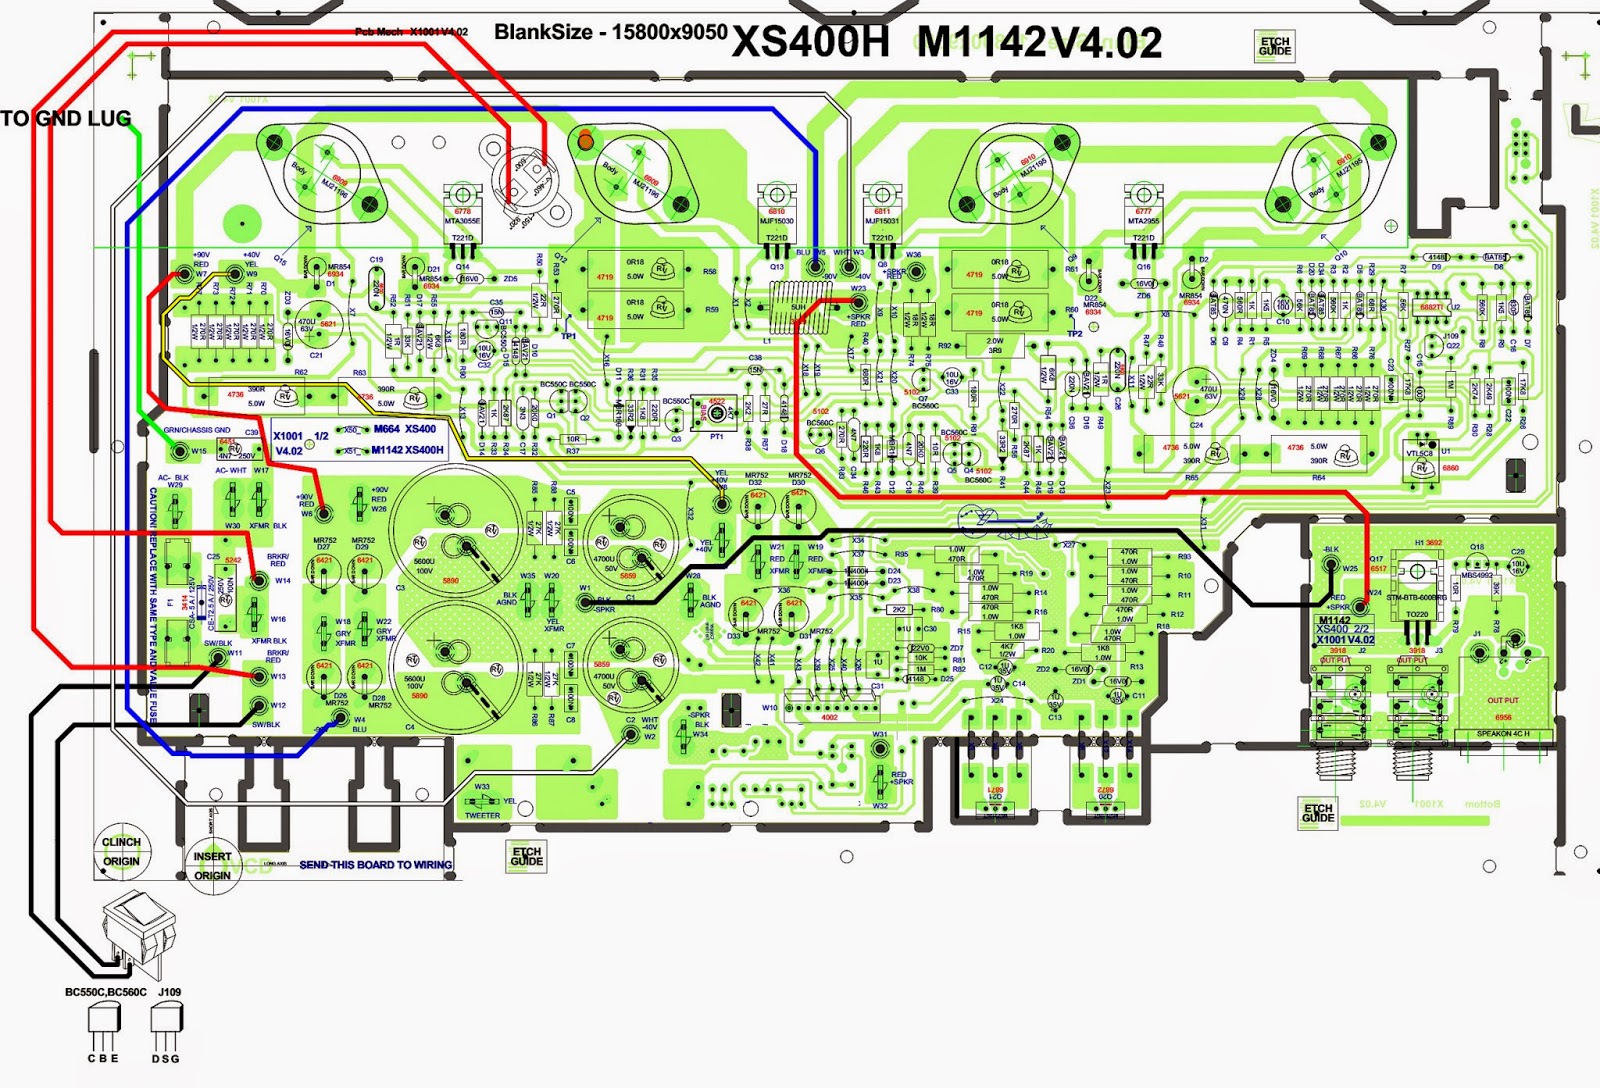 samsung dv48j7700ew/a2 wiring diagram